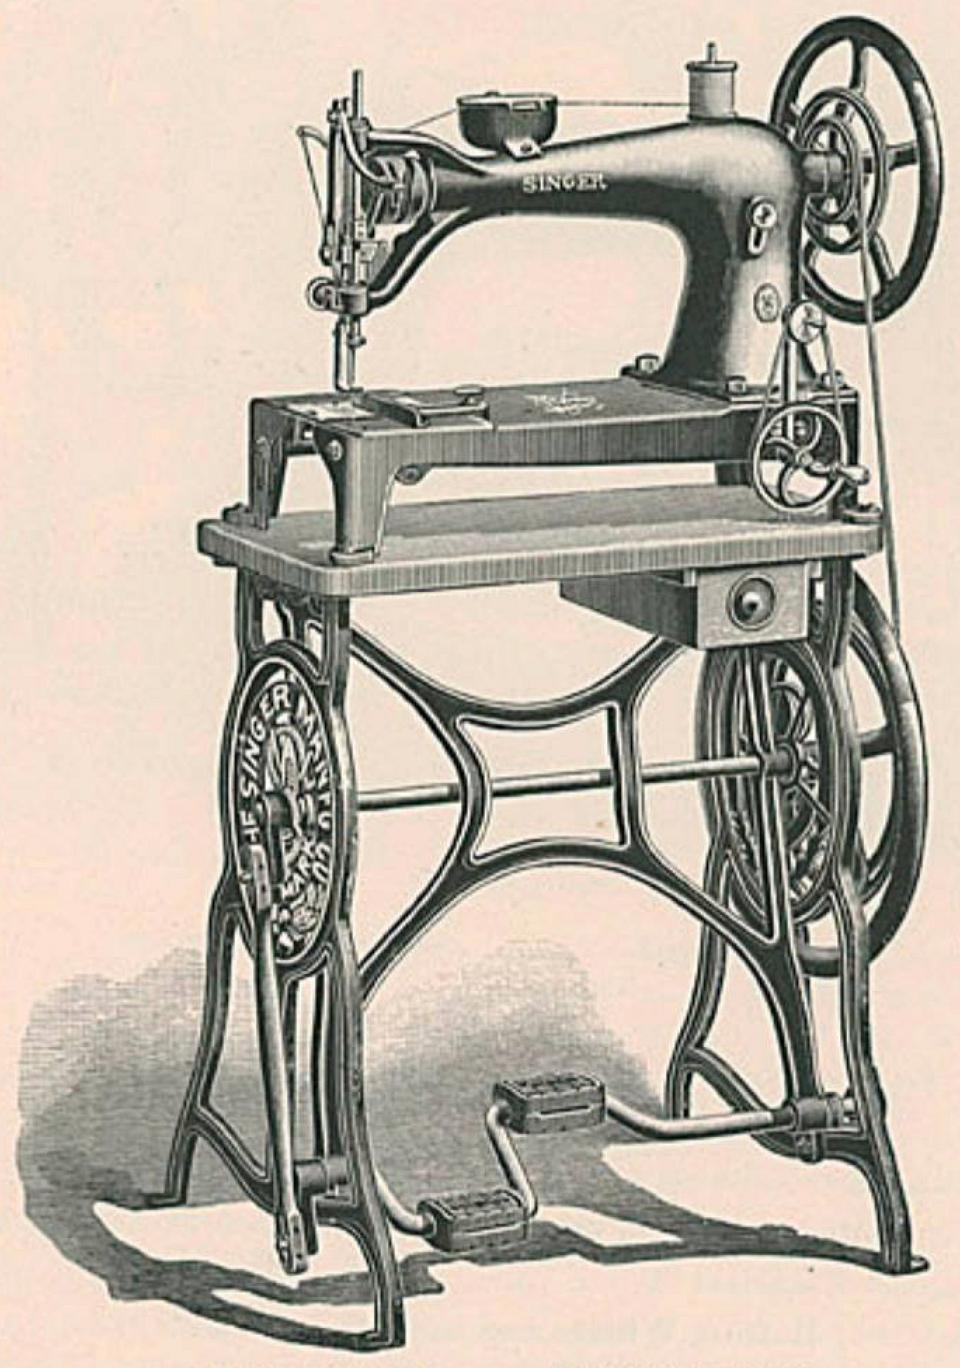 Singer Model 7-1 Sewing Machine